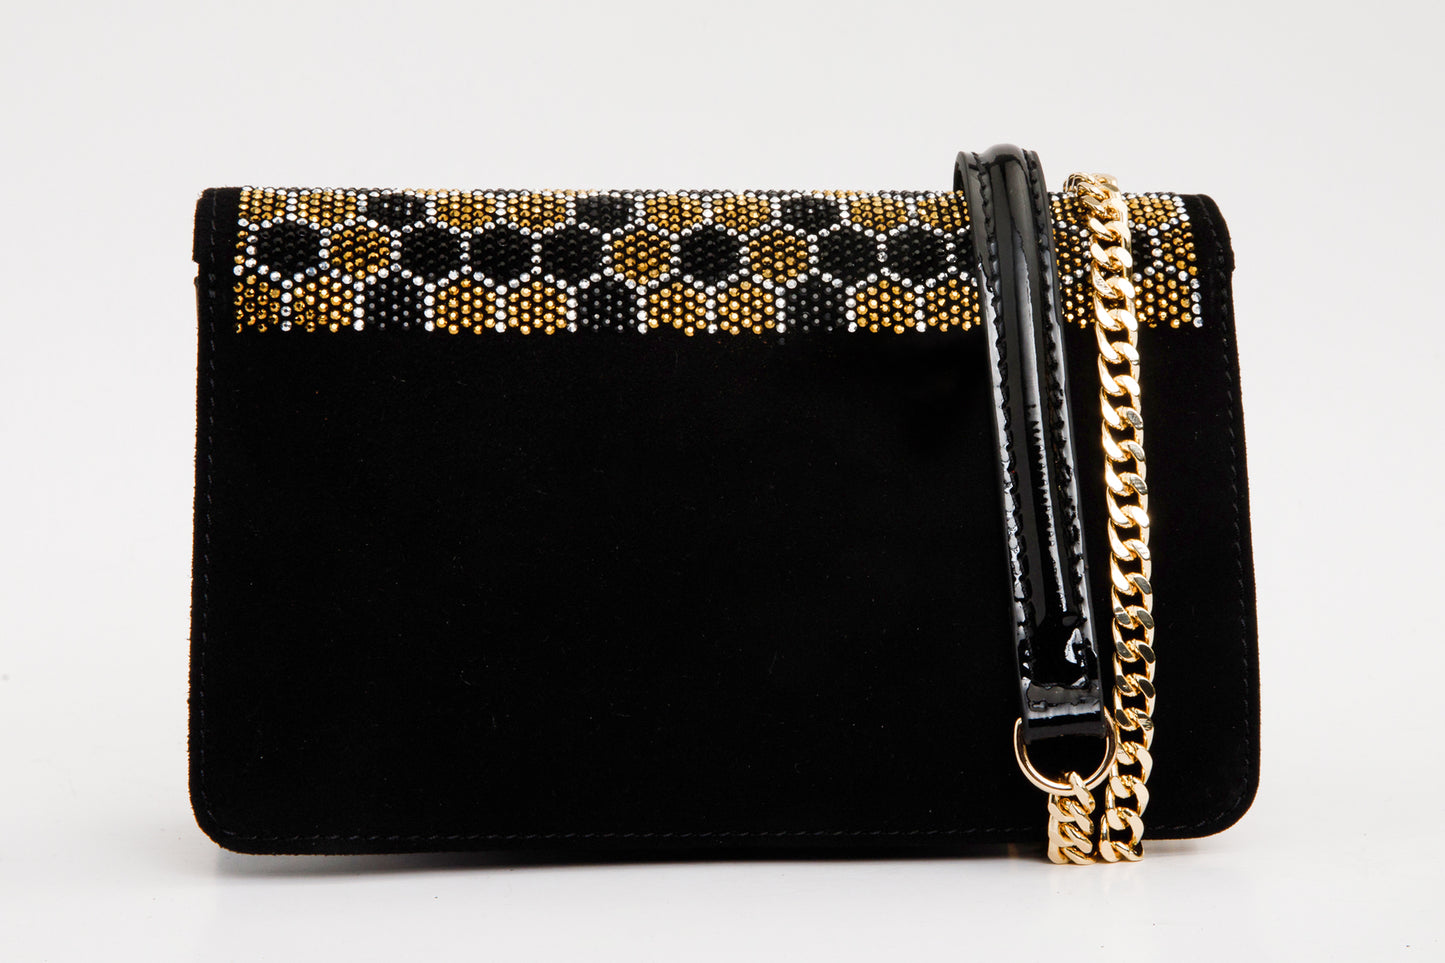 The Bolu Black Glitter Leather Handbag